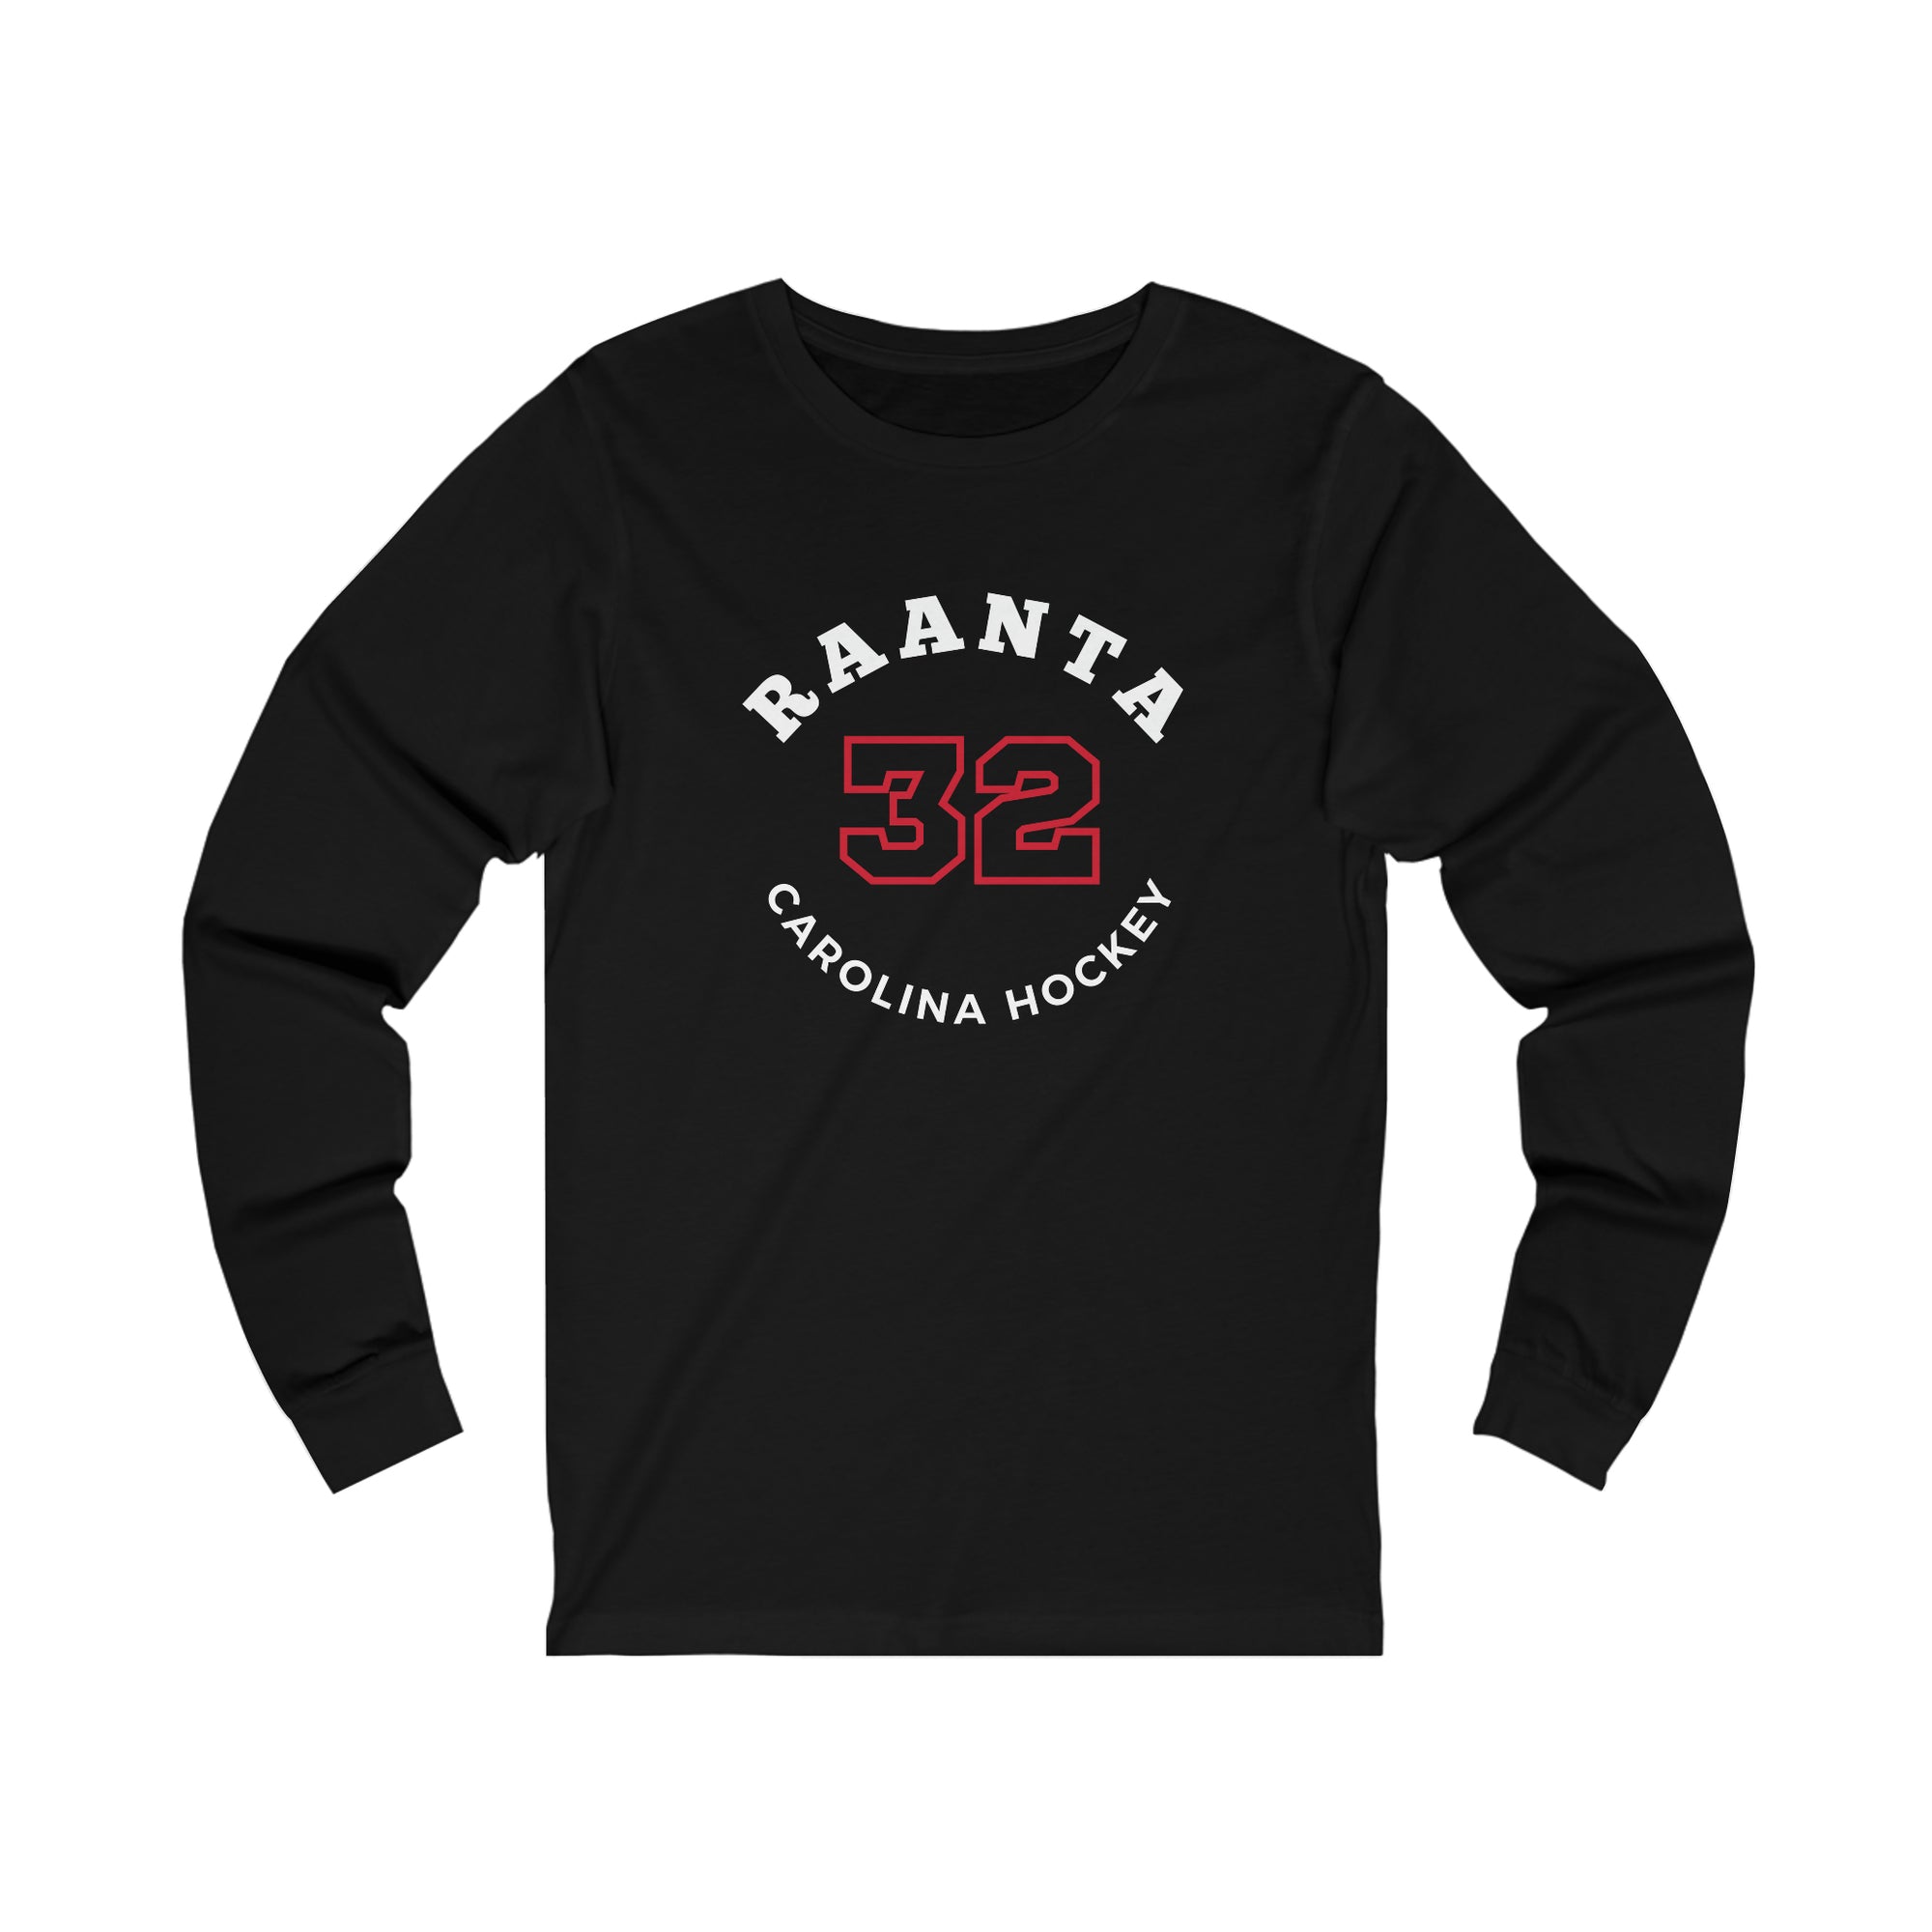 Raanta 32 Carolina Hockey Number Arch Design Unisex Jersey Long Sleeve Shirt